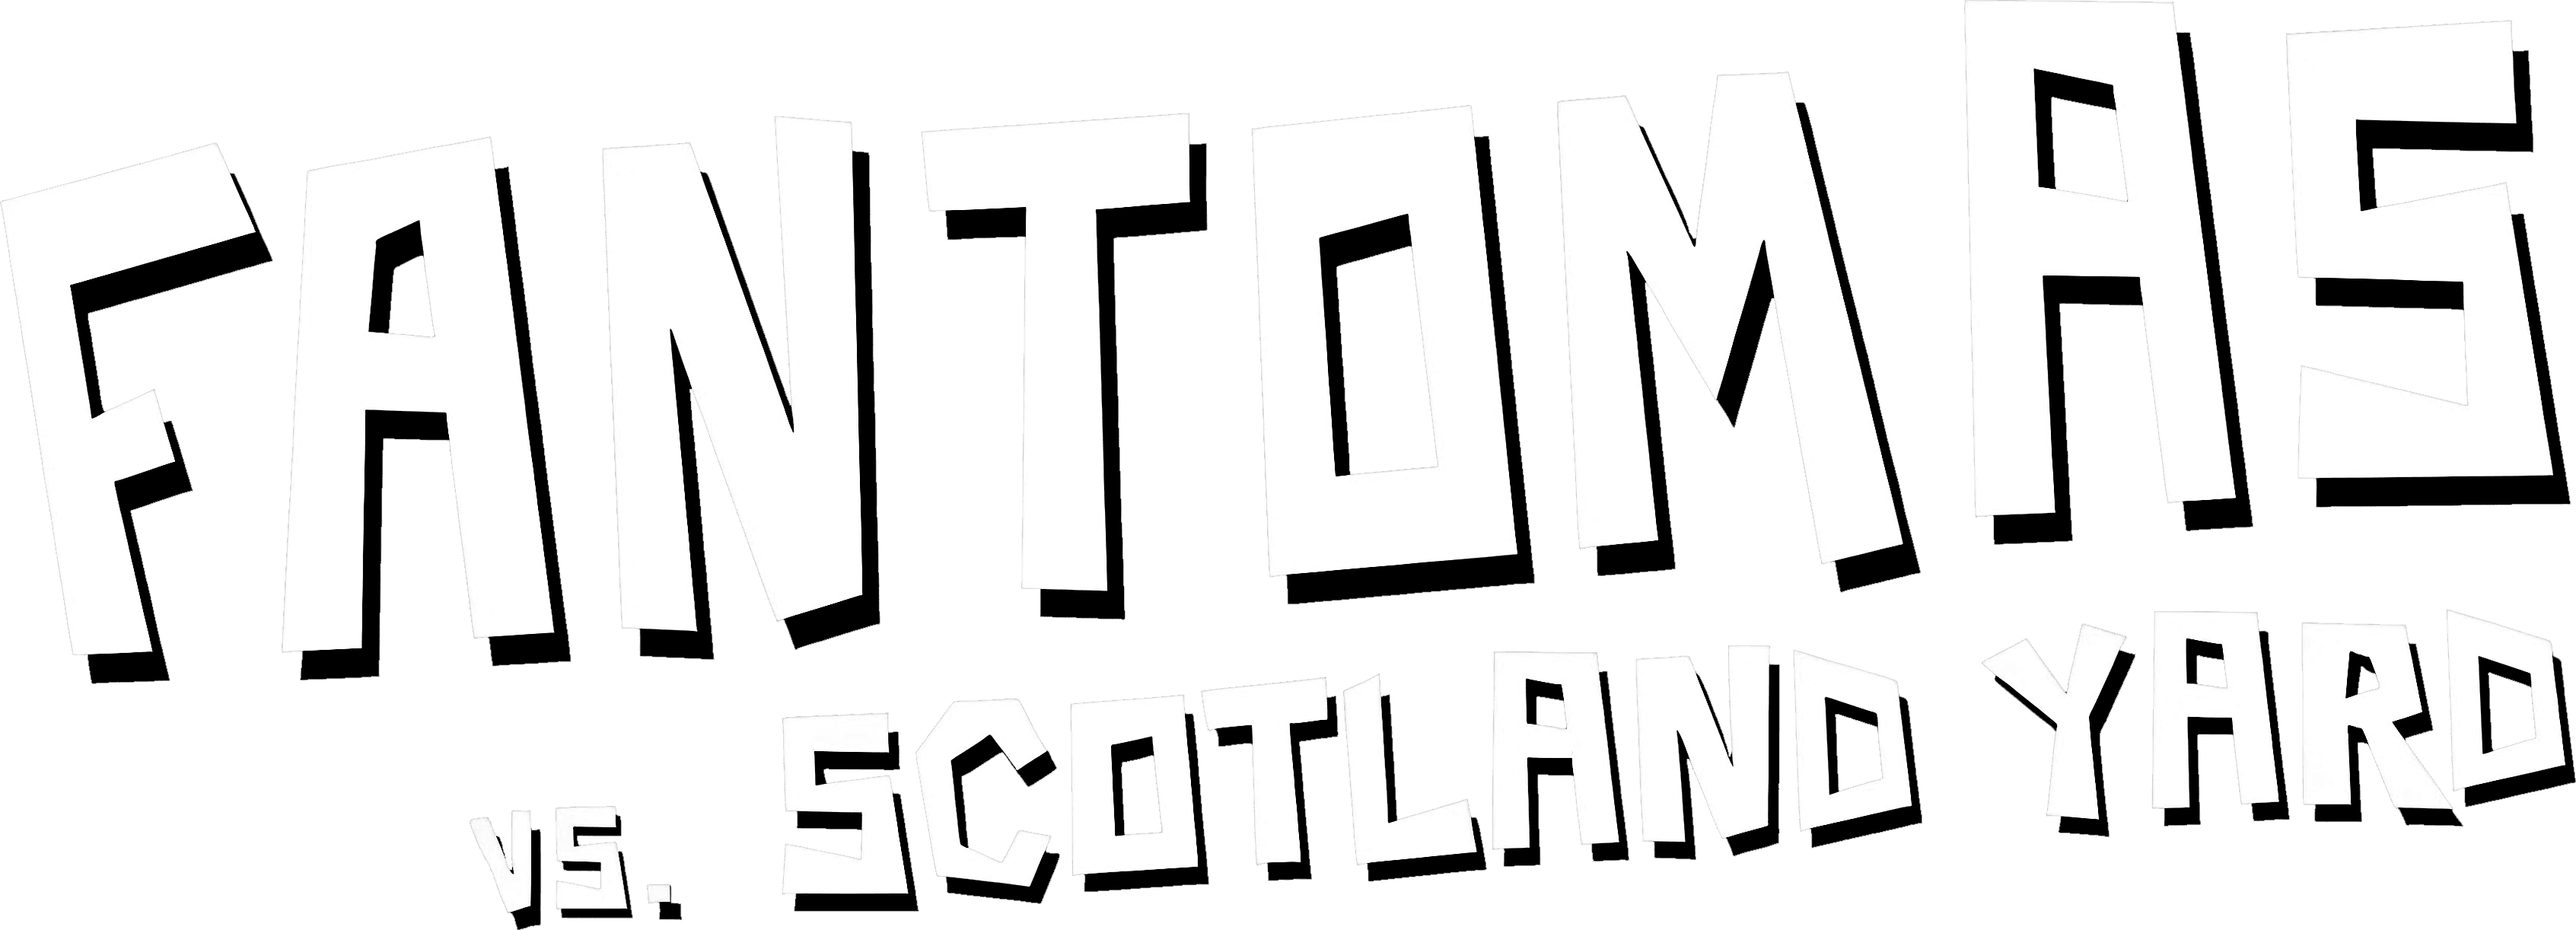 Fantomas vs. Scotland Yard logo